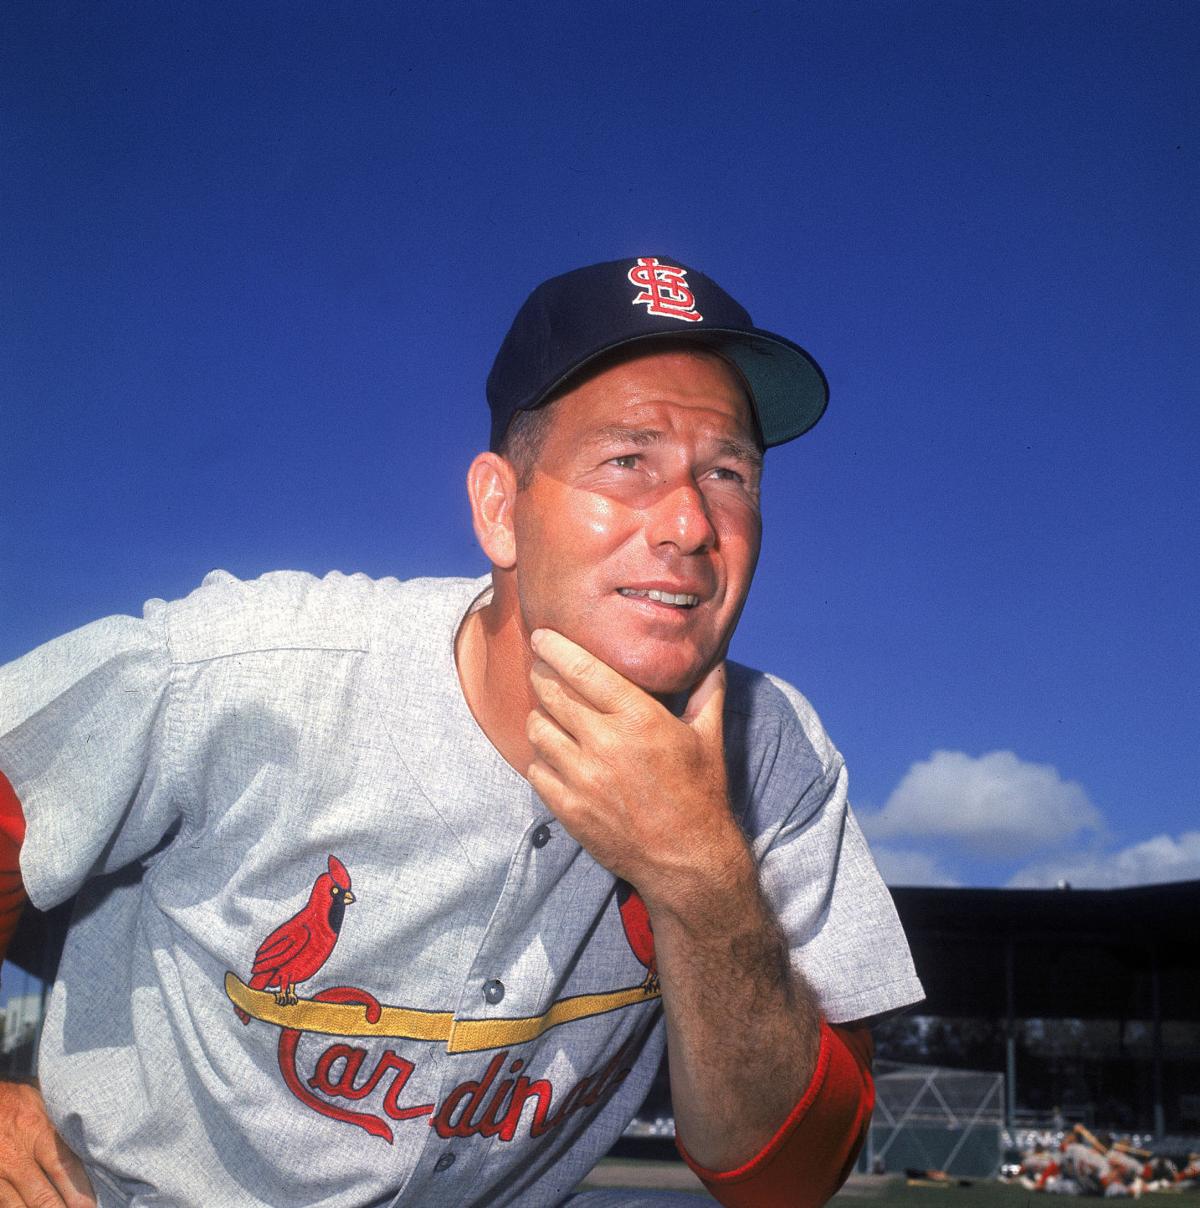 hemus solly cardinals louis st manager player last dies stltoday 1959 ap baseball